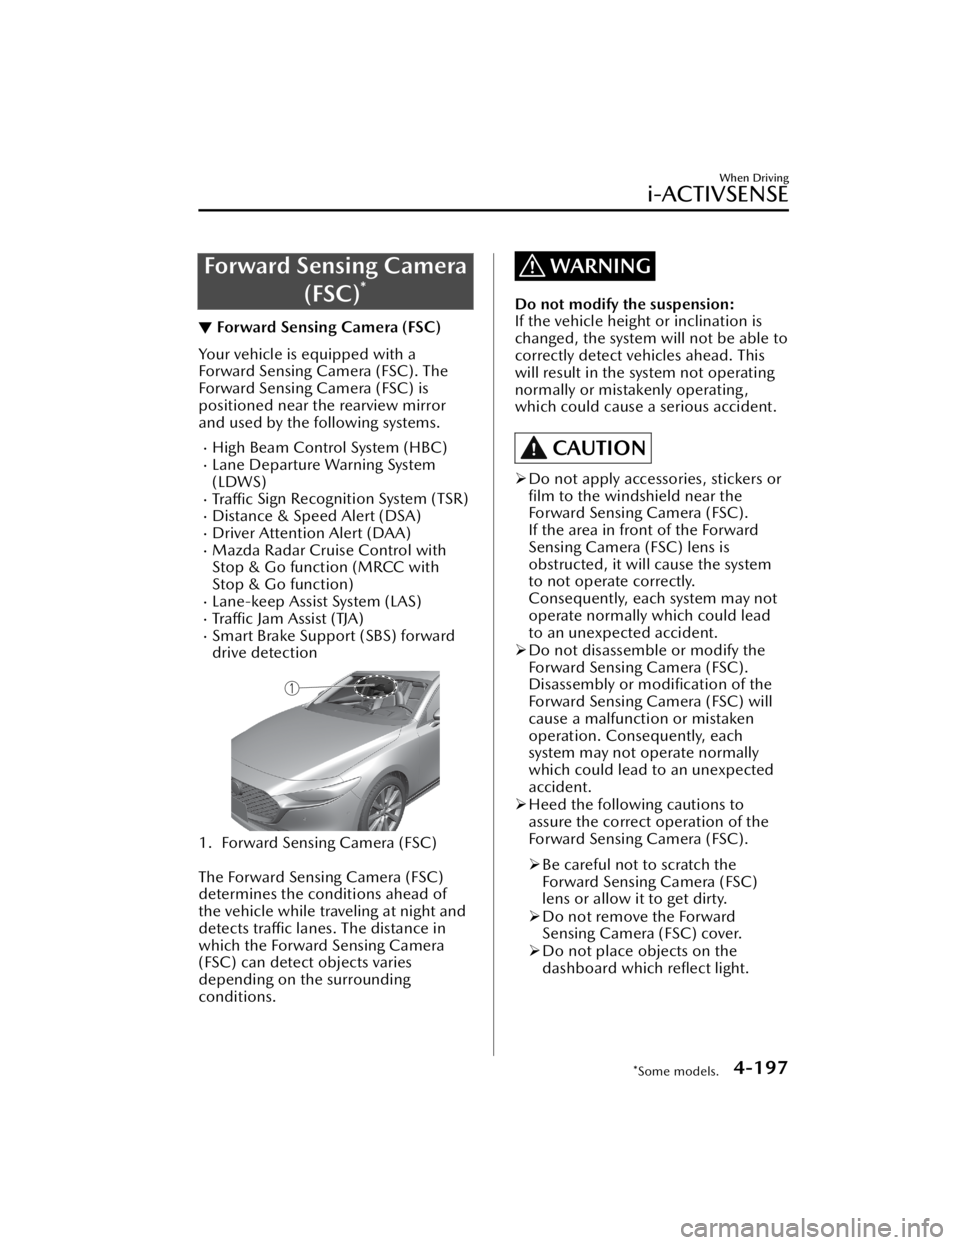 MAZDA CX3 2023  Owners Manual Forward Sensing Camera(FSC)
*
▼Forward Sensing Camera (FSC)
Your vehicle is equipped with a
Forward Sensing Camera (FSC). The
Forward Sensing Camera (FSC) is
positioned near the rearview mirror
and 